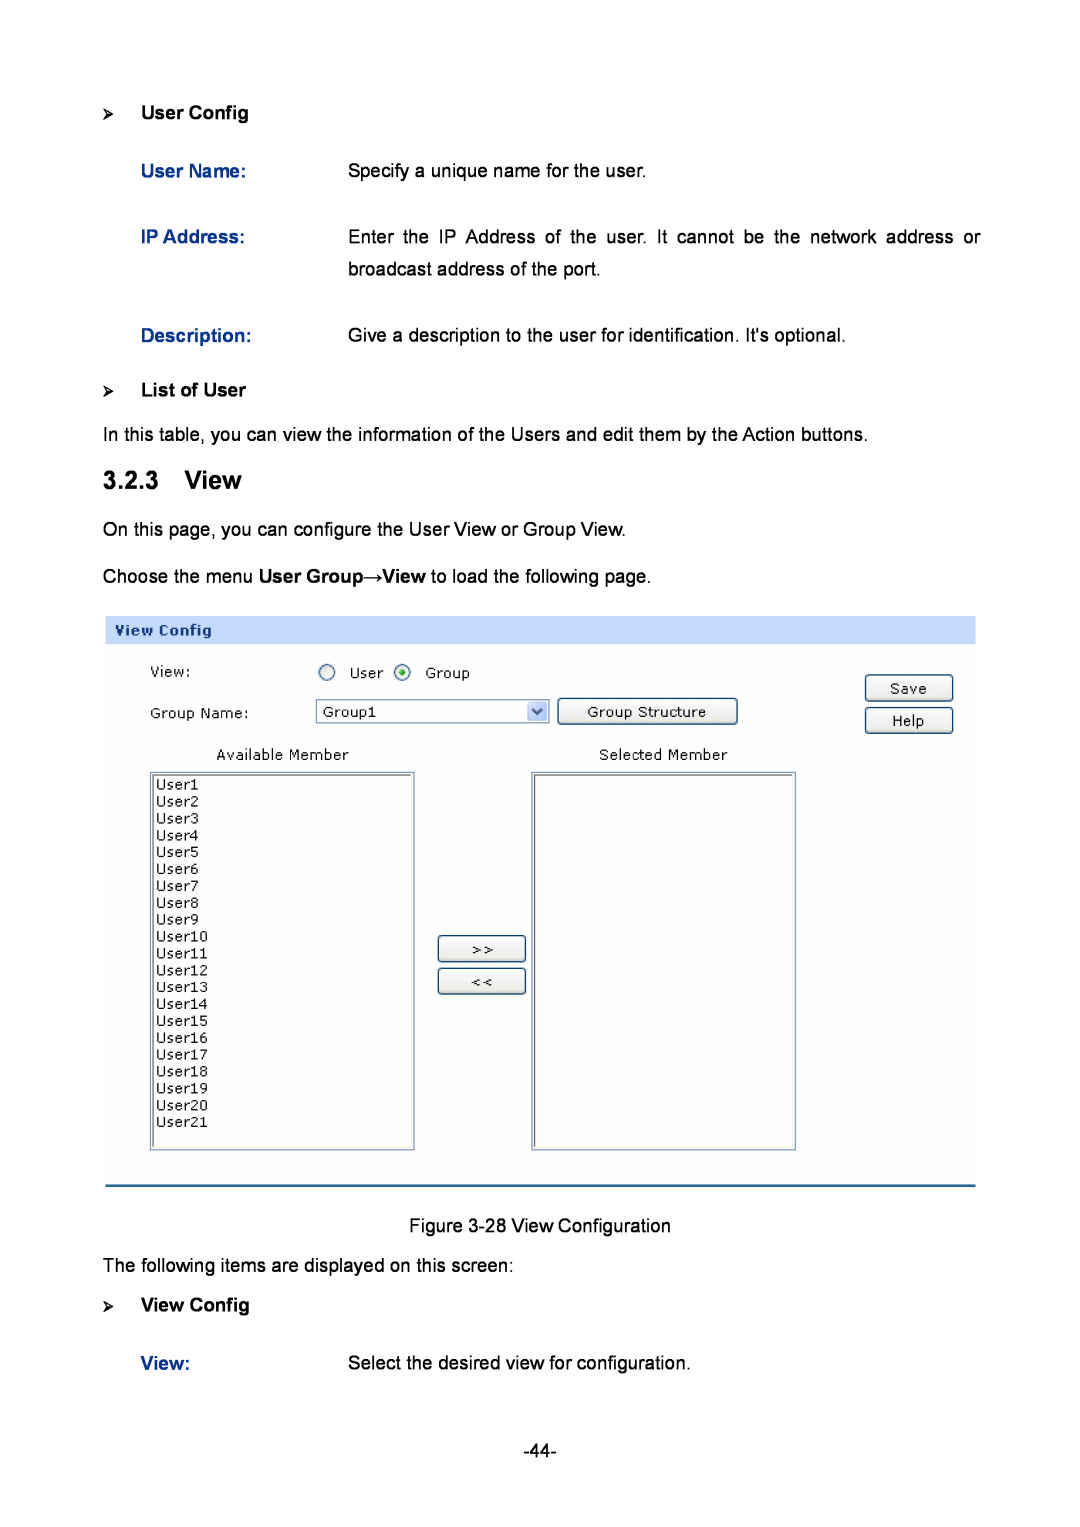 TP-Link TL-ER6020 manual  User Config,  List of User,  View Config 